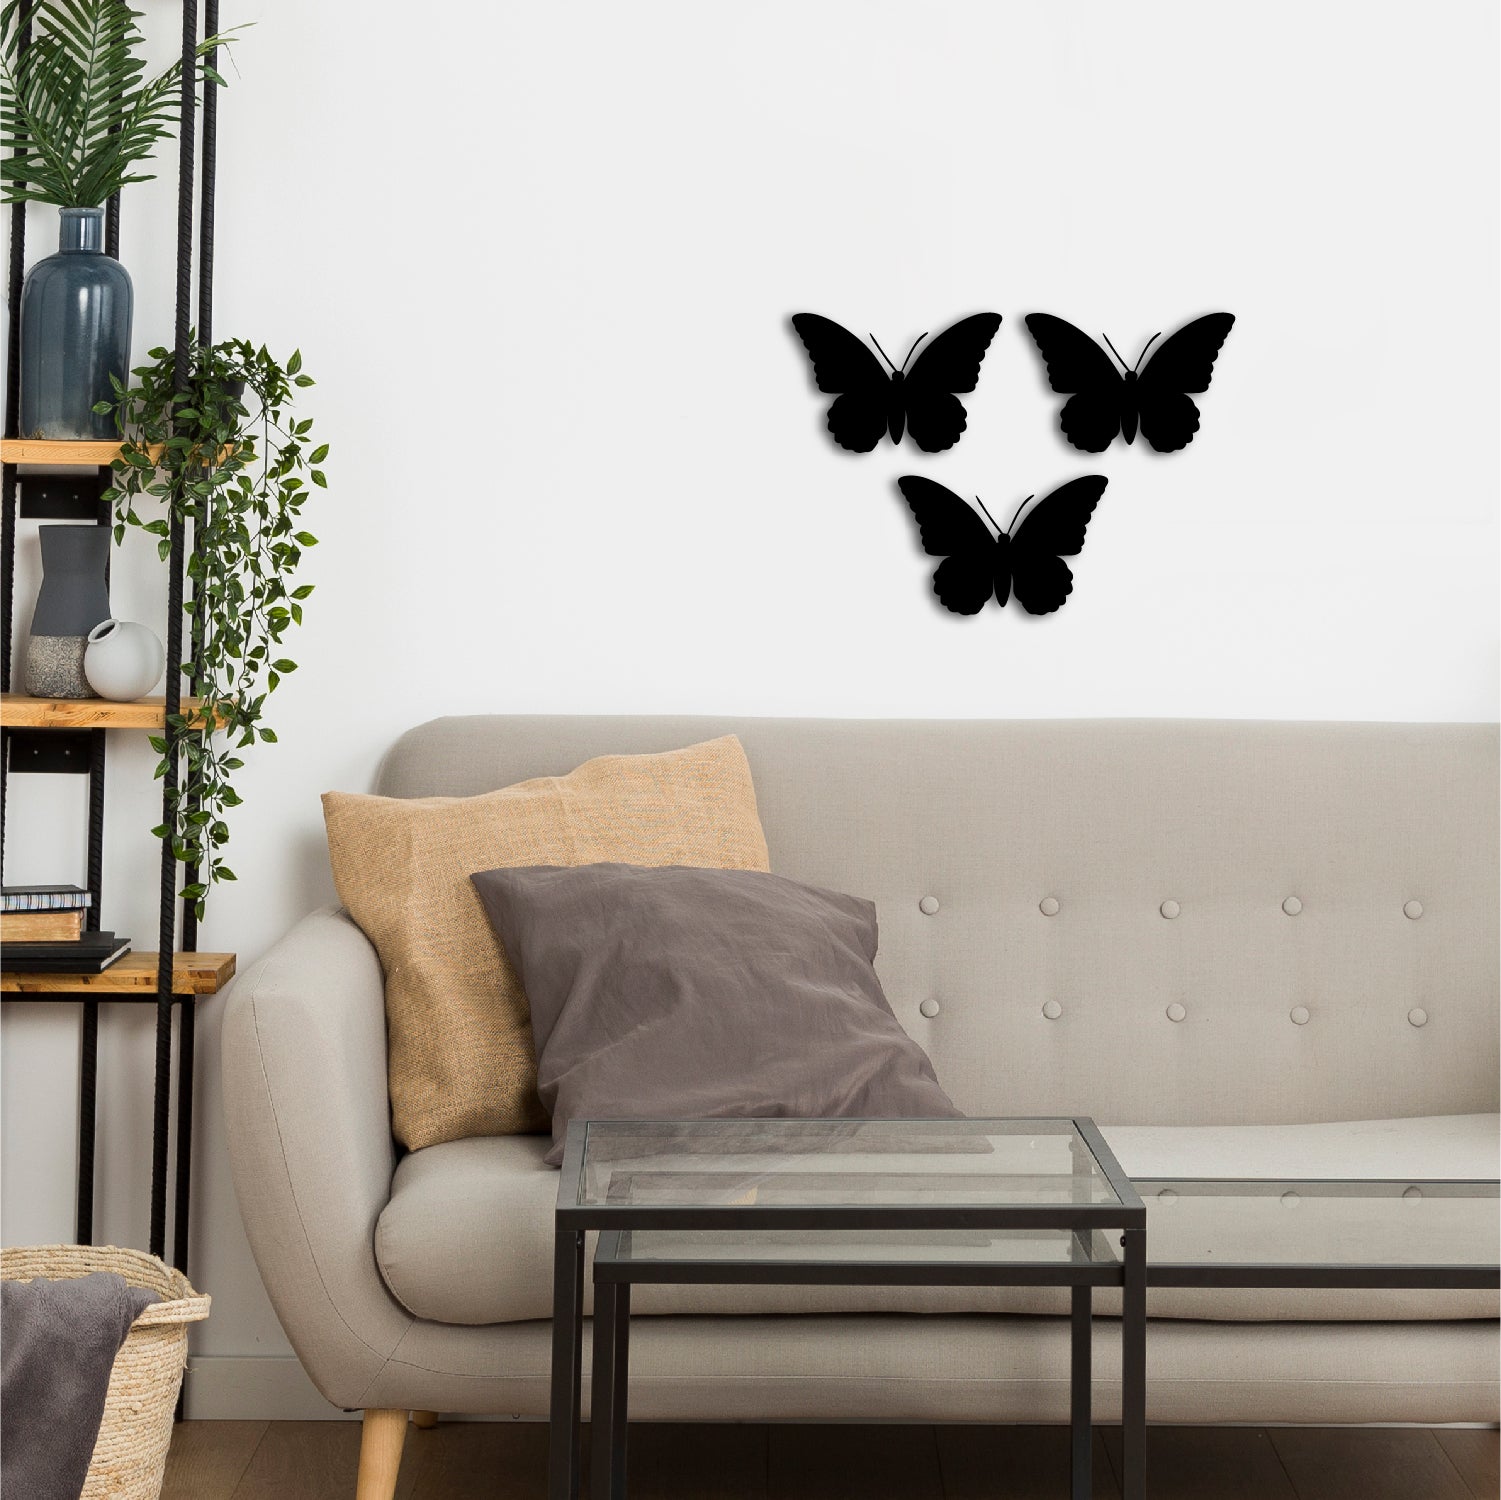 Set of 3 "Butterflies" Black Engineered Wood Wall Art Cutout, Ready to Hang Home Decor 4